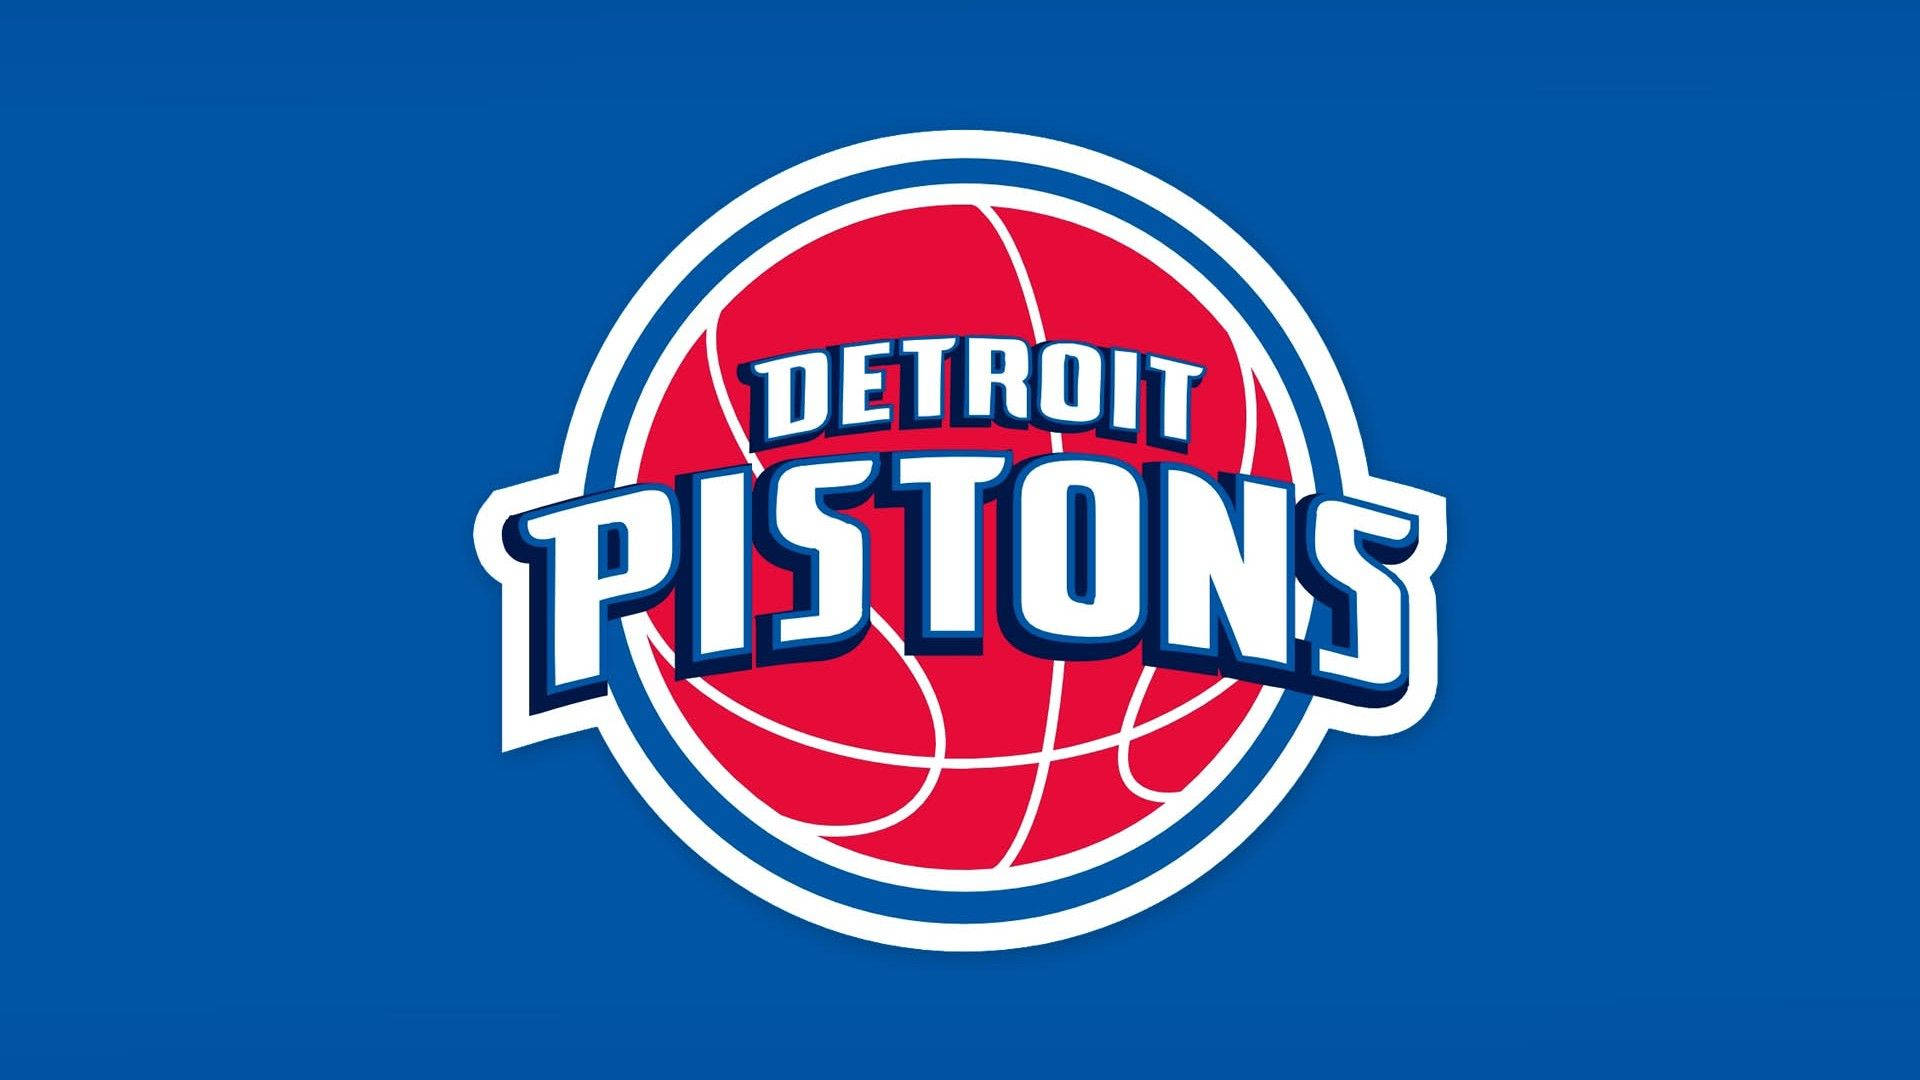 Detroit Pistons Vintage Team Logo Background